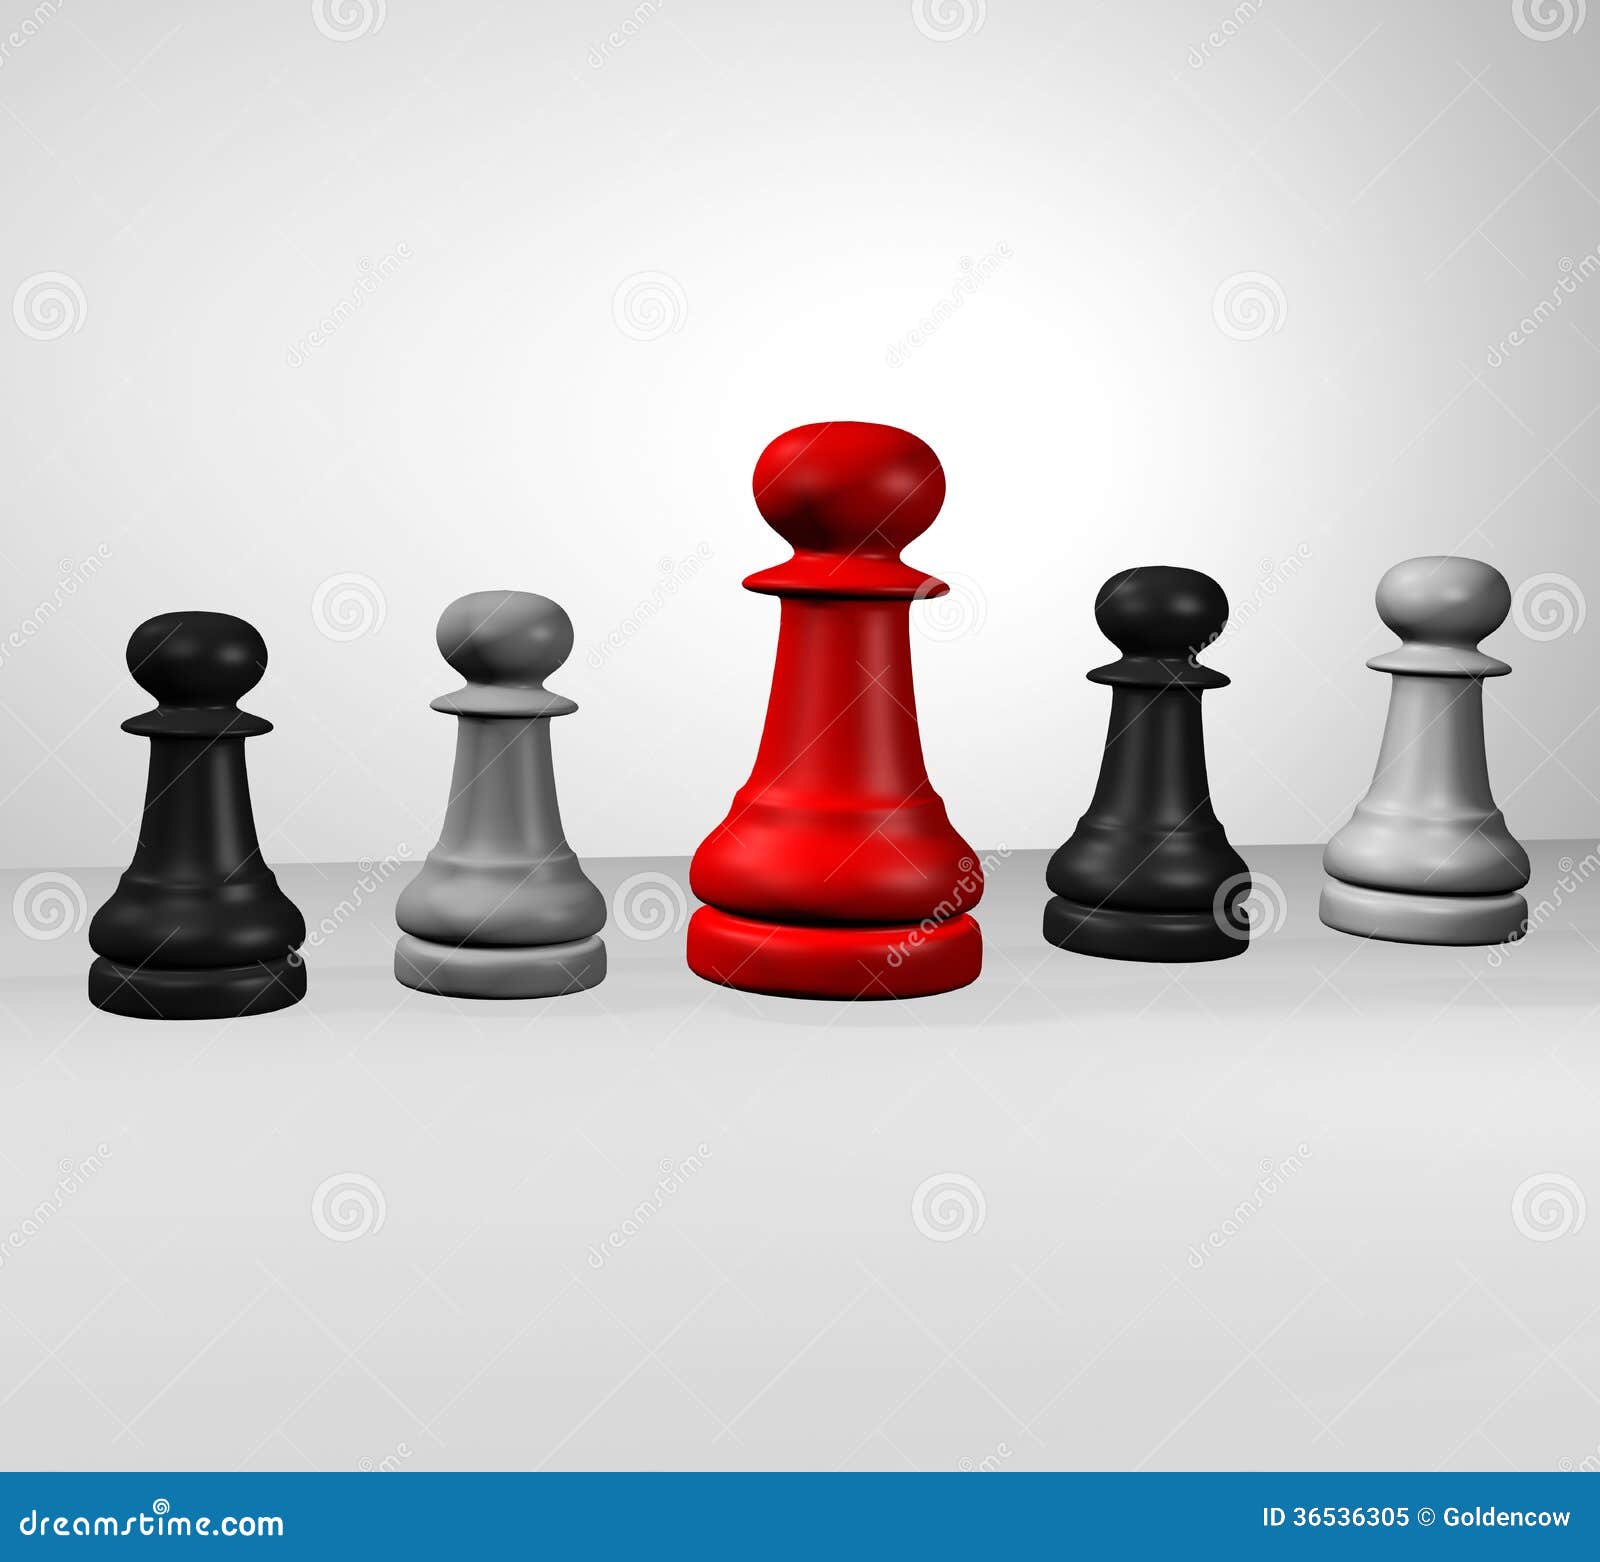 Set of chess pawns stock illustration. Illustration of isolated - 36536305